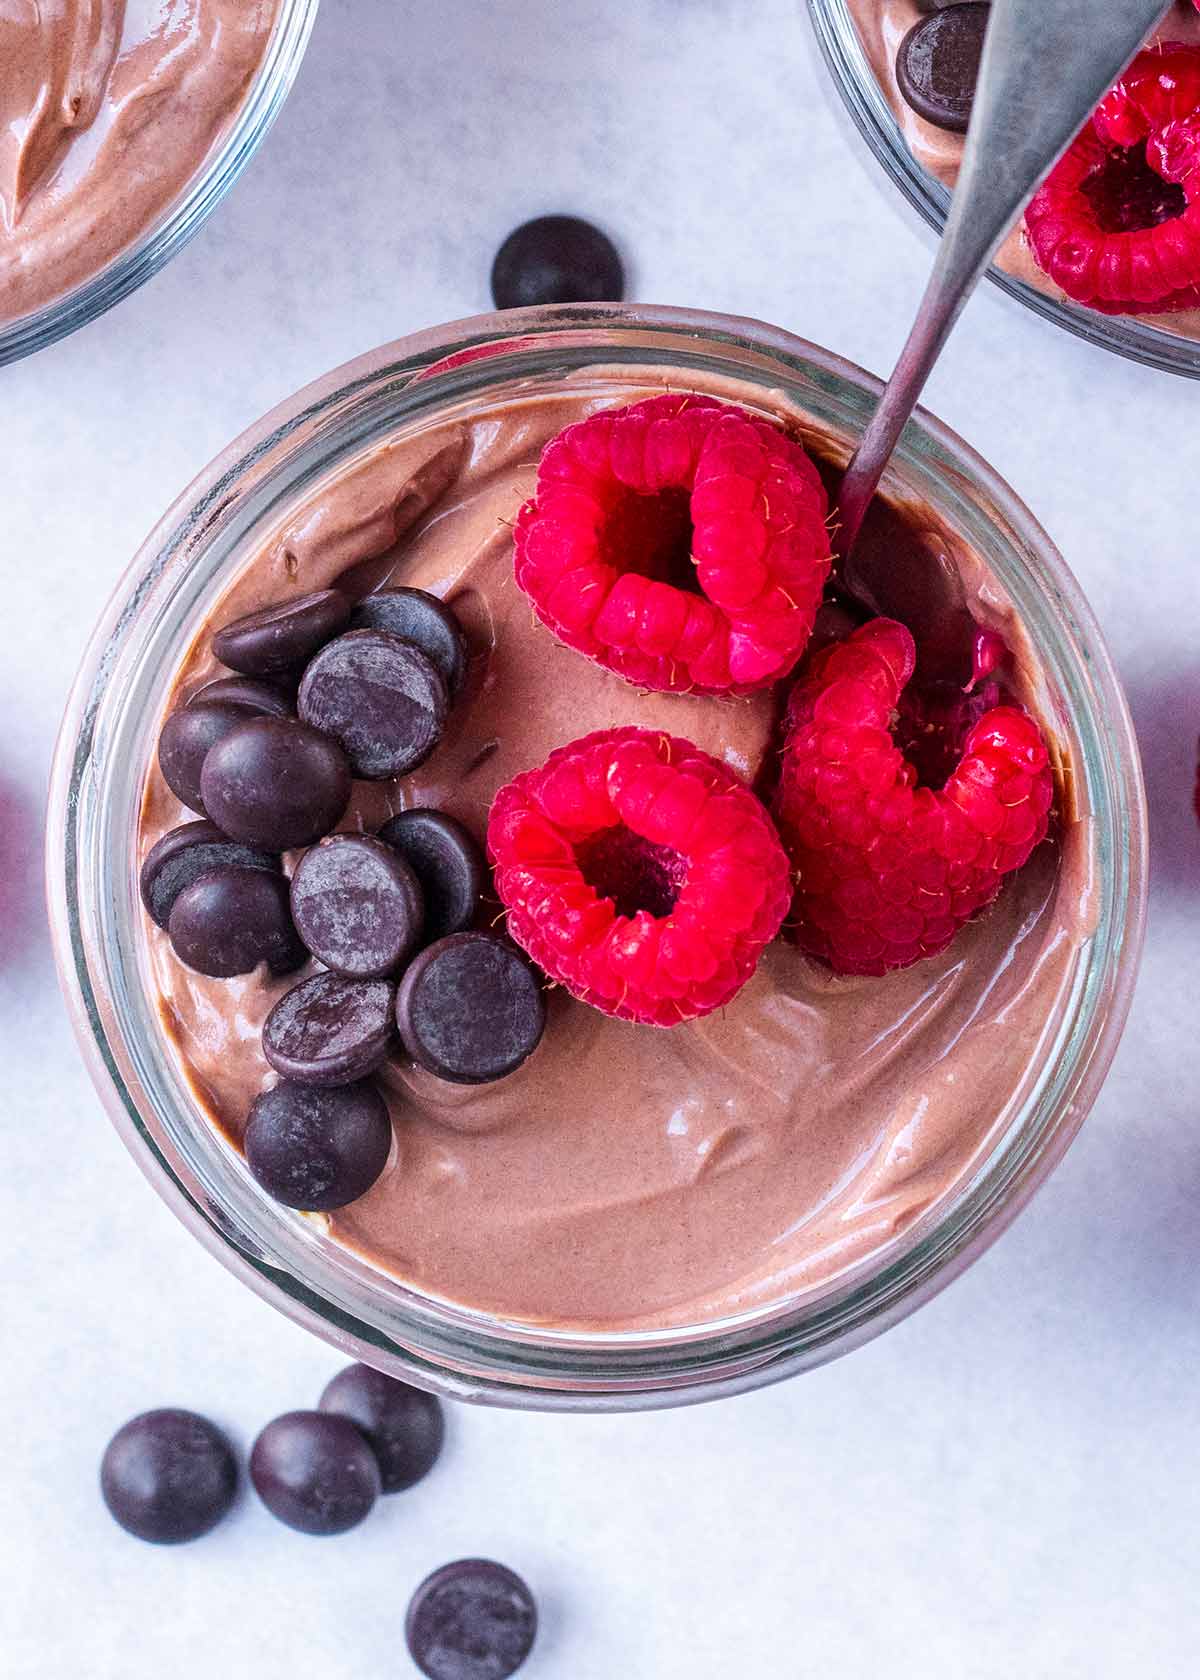 Chocolate yogurt topped with raspberries and chocolate chips.